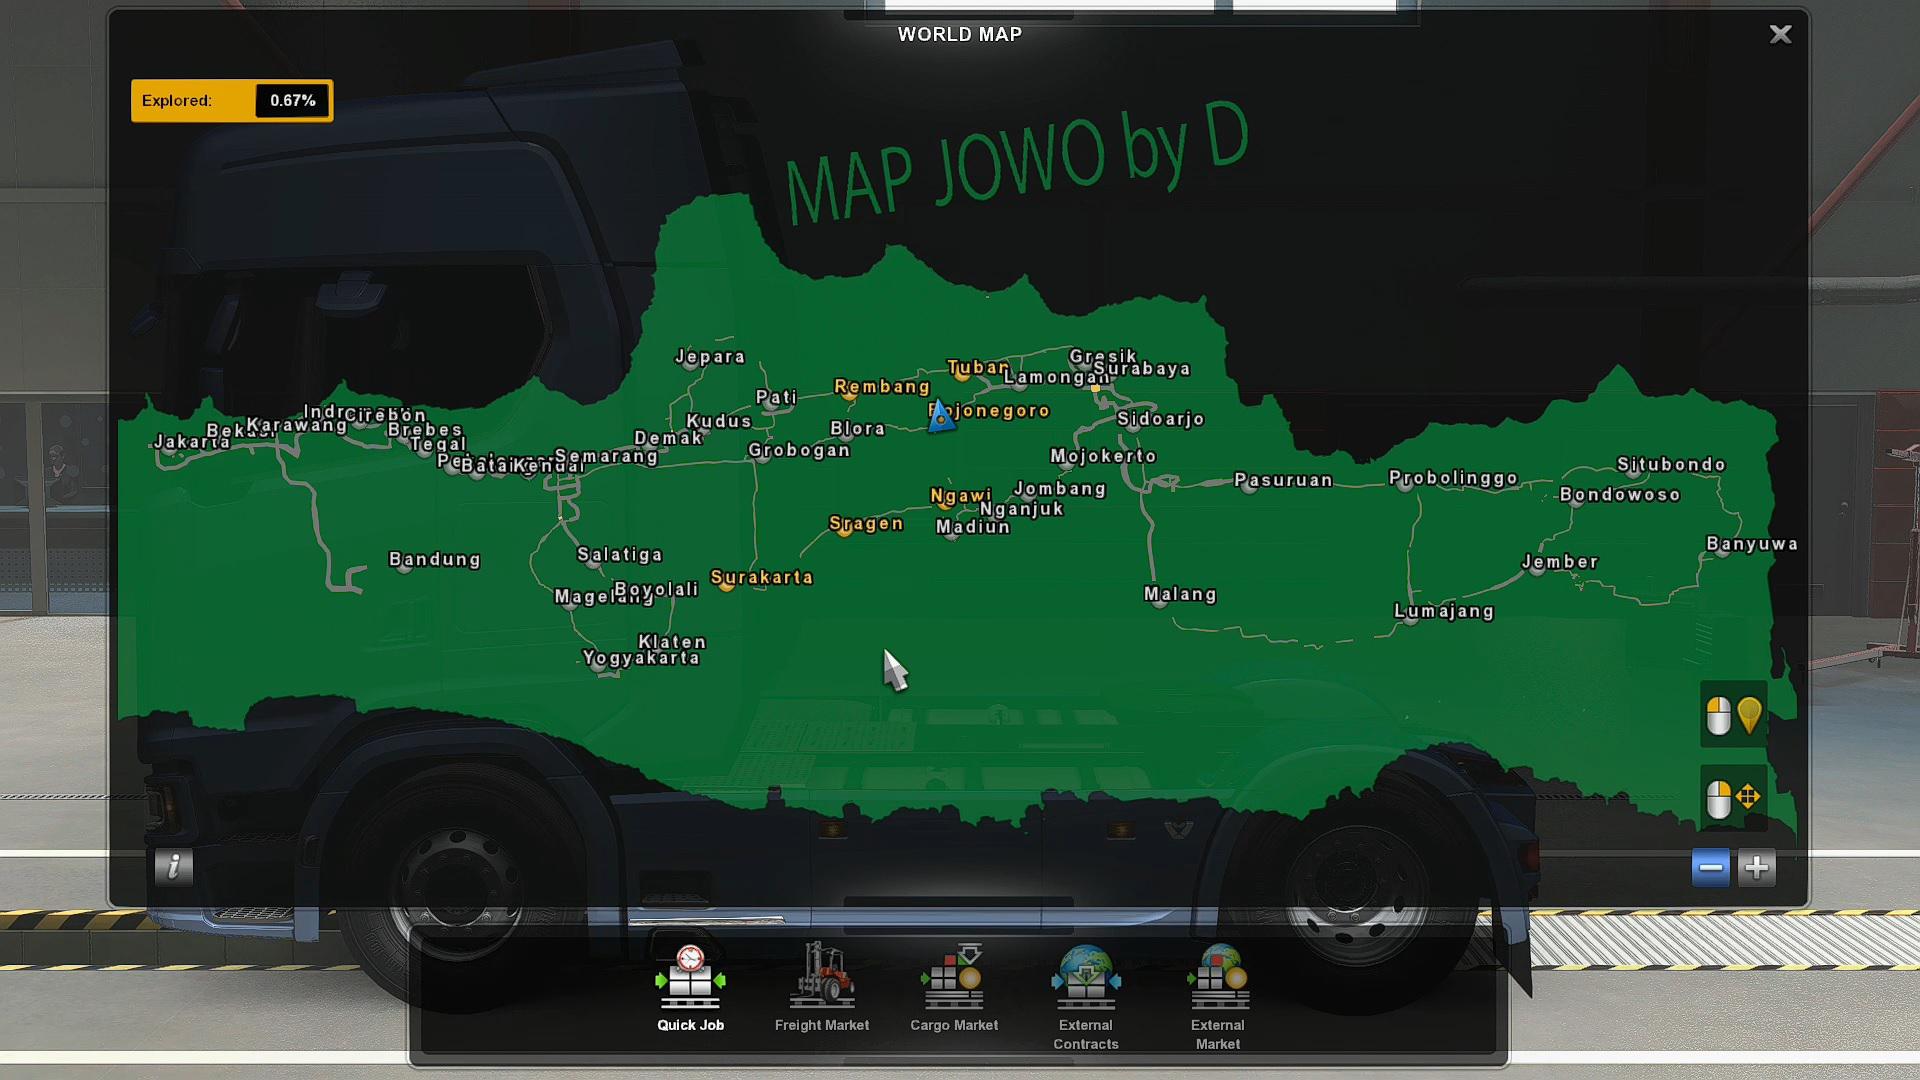 euro truck simulator 2 indonesia